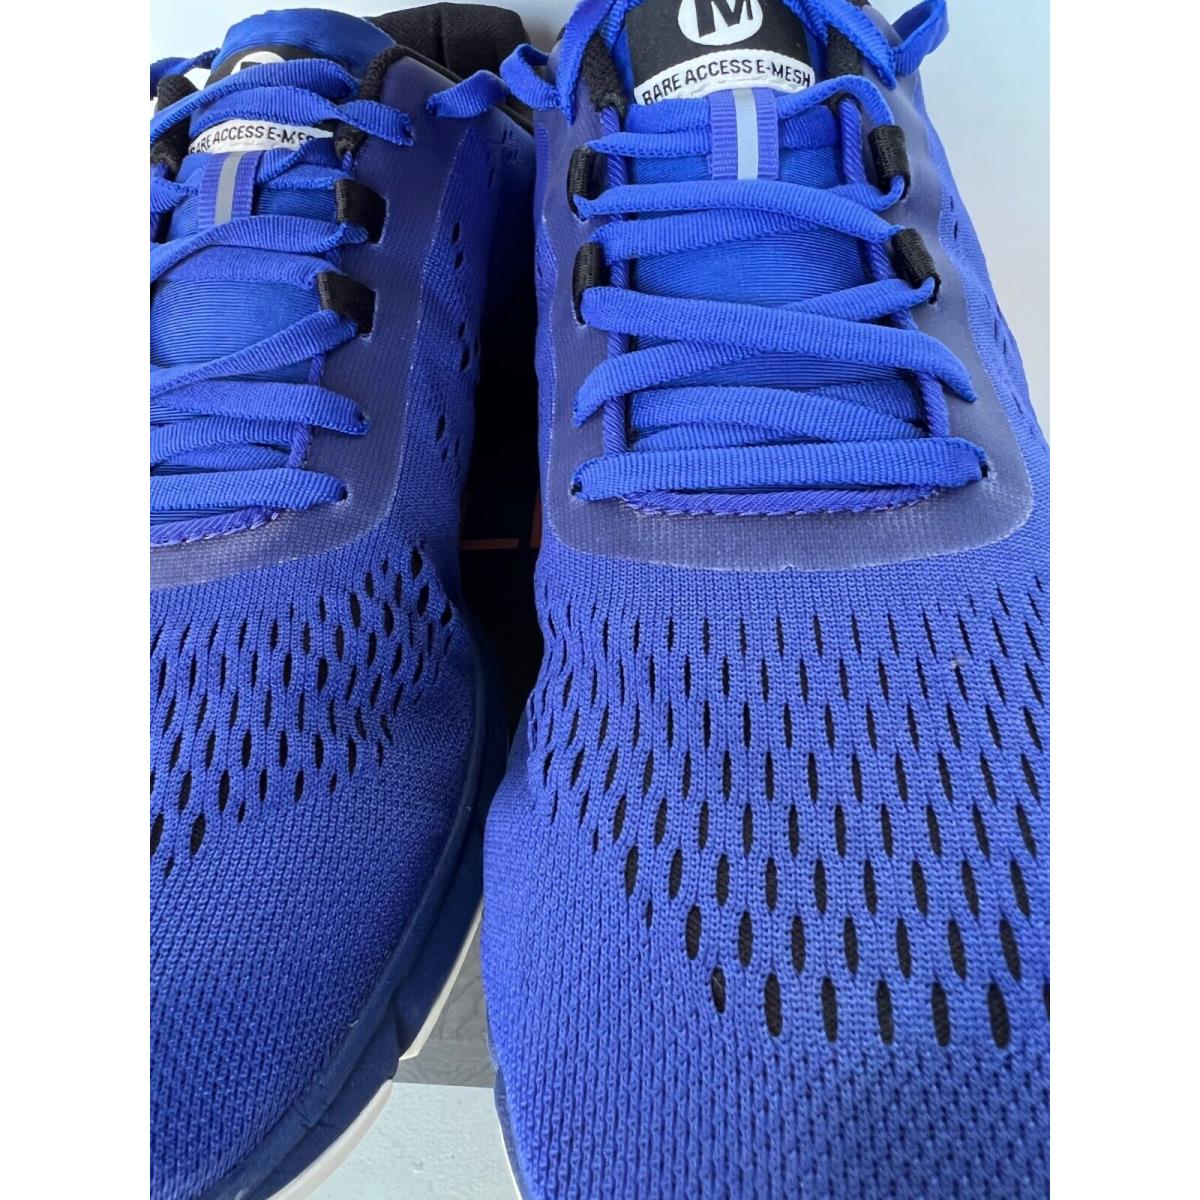 Merrell shoes  - Blue 1